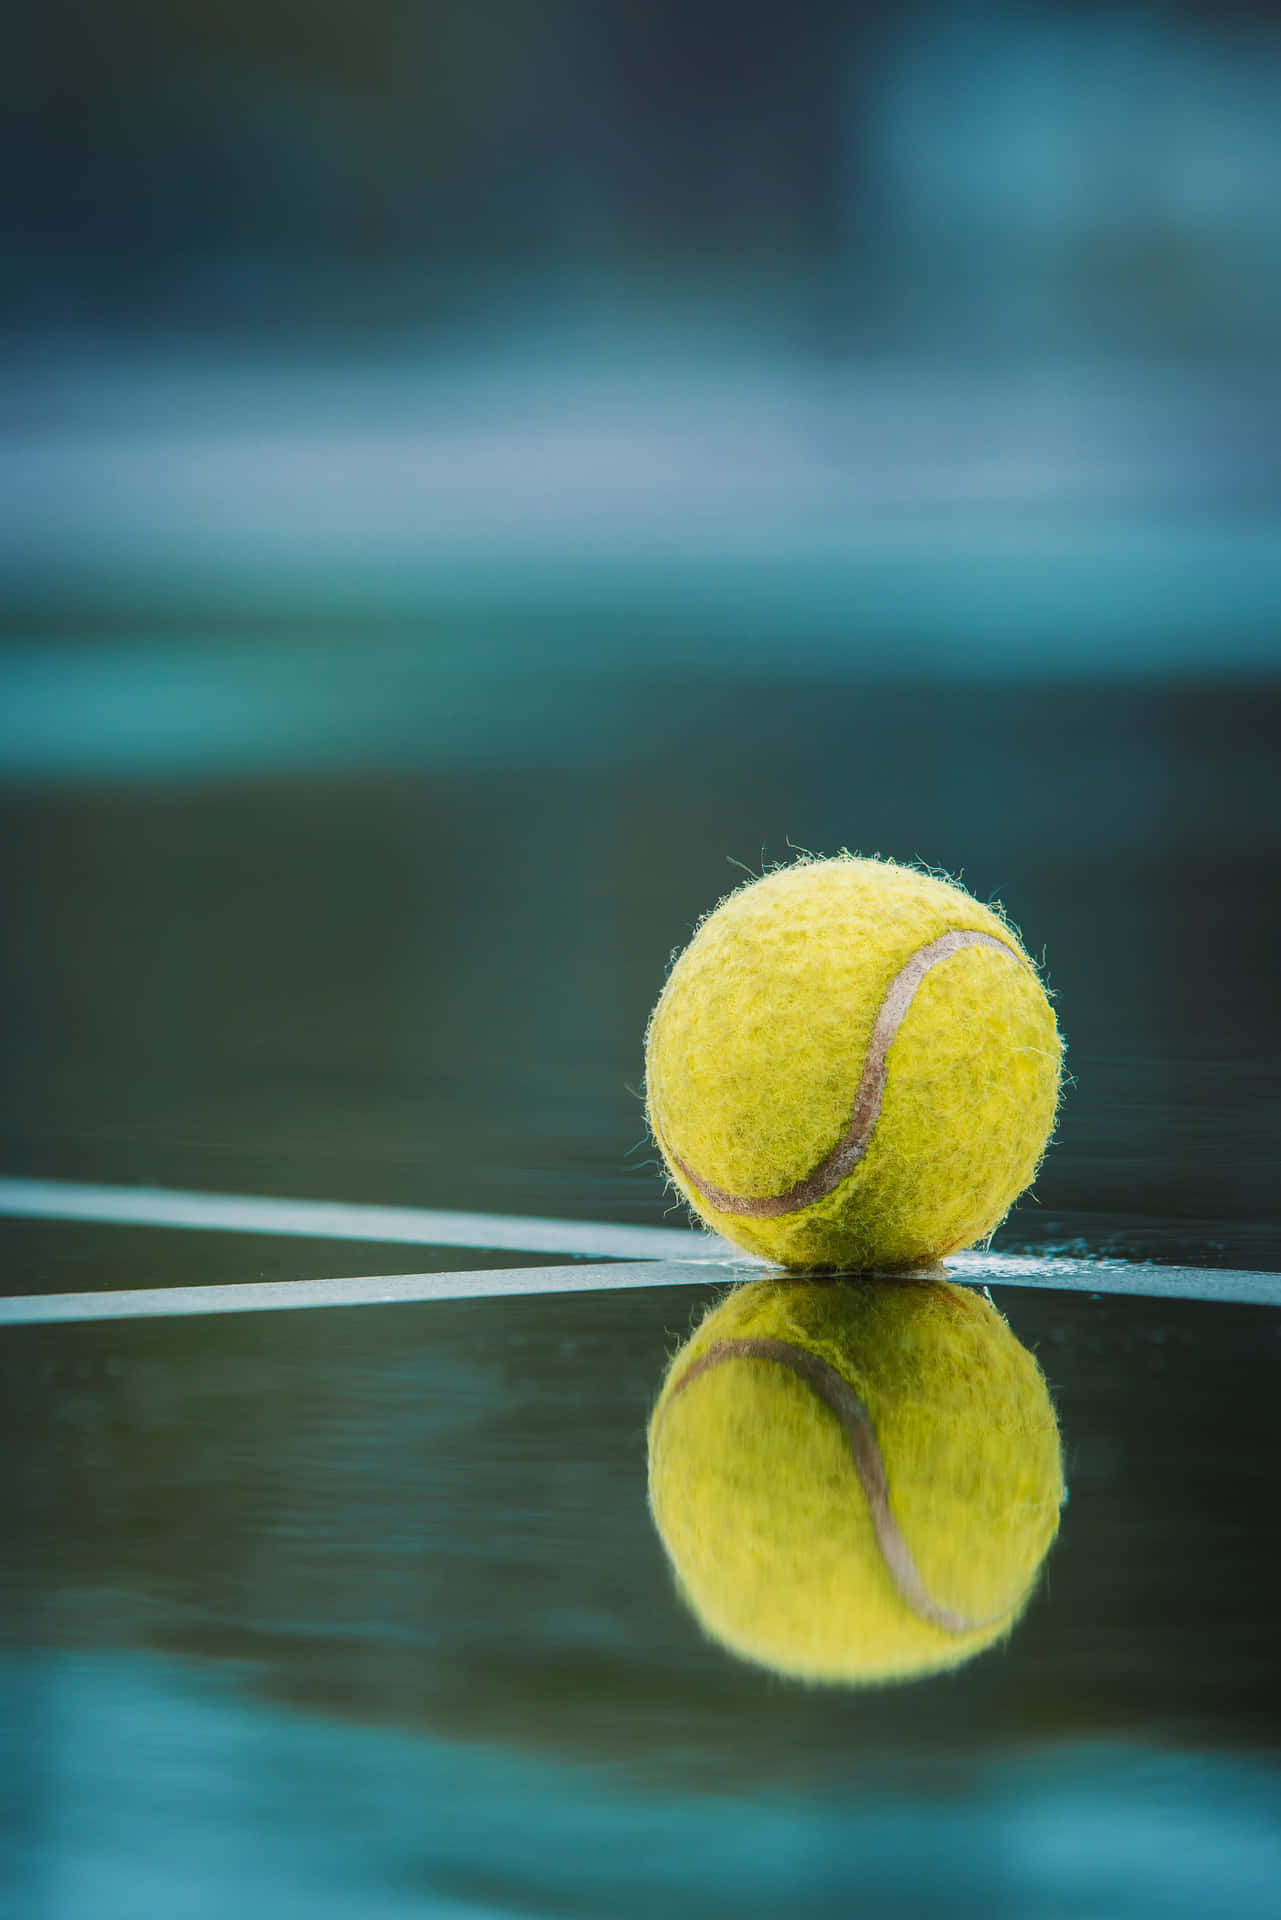 A Close-Up Image of a Tennis Ball Wallpaper